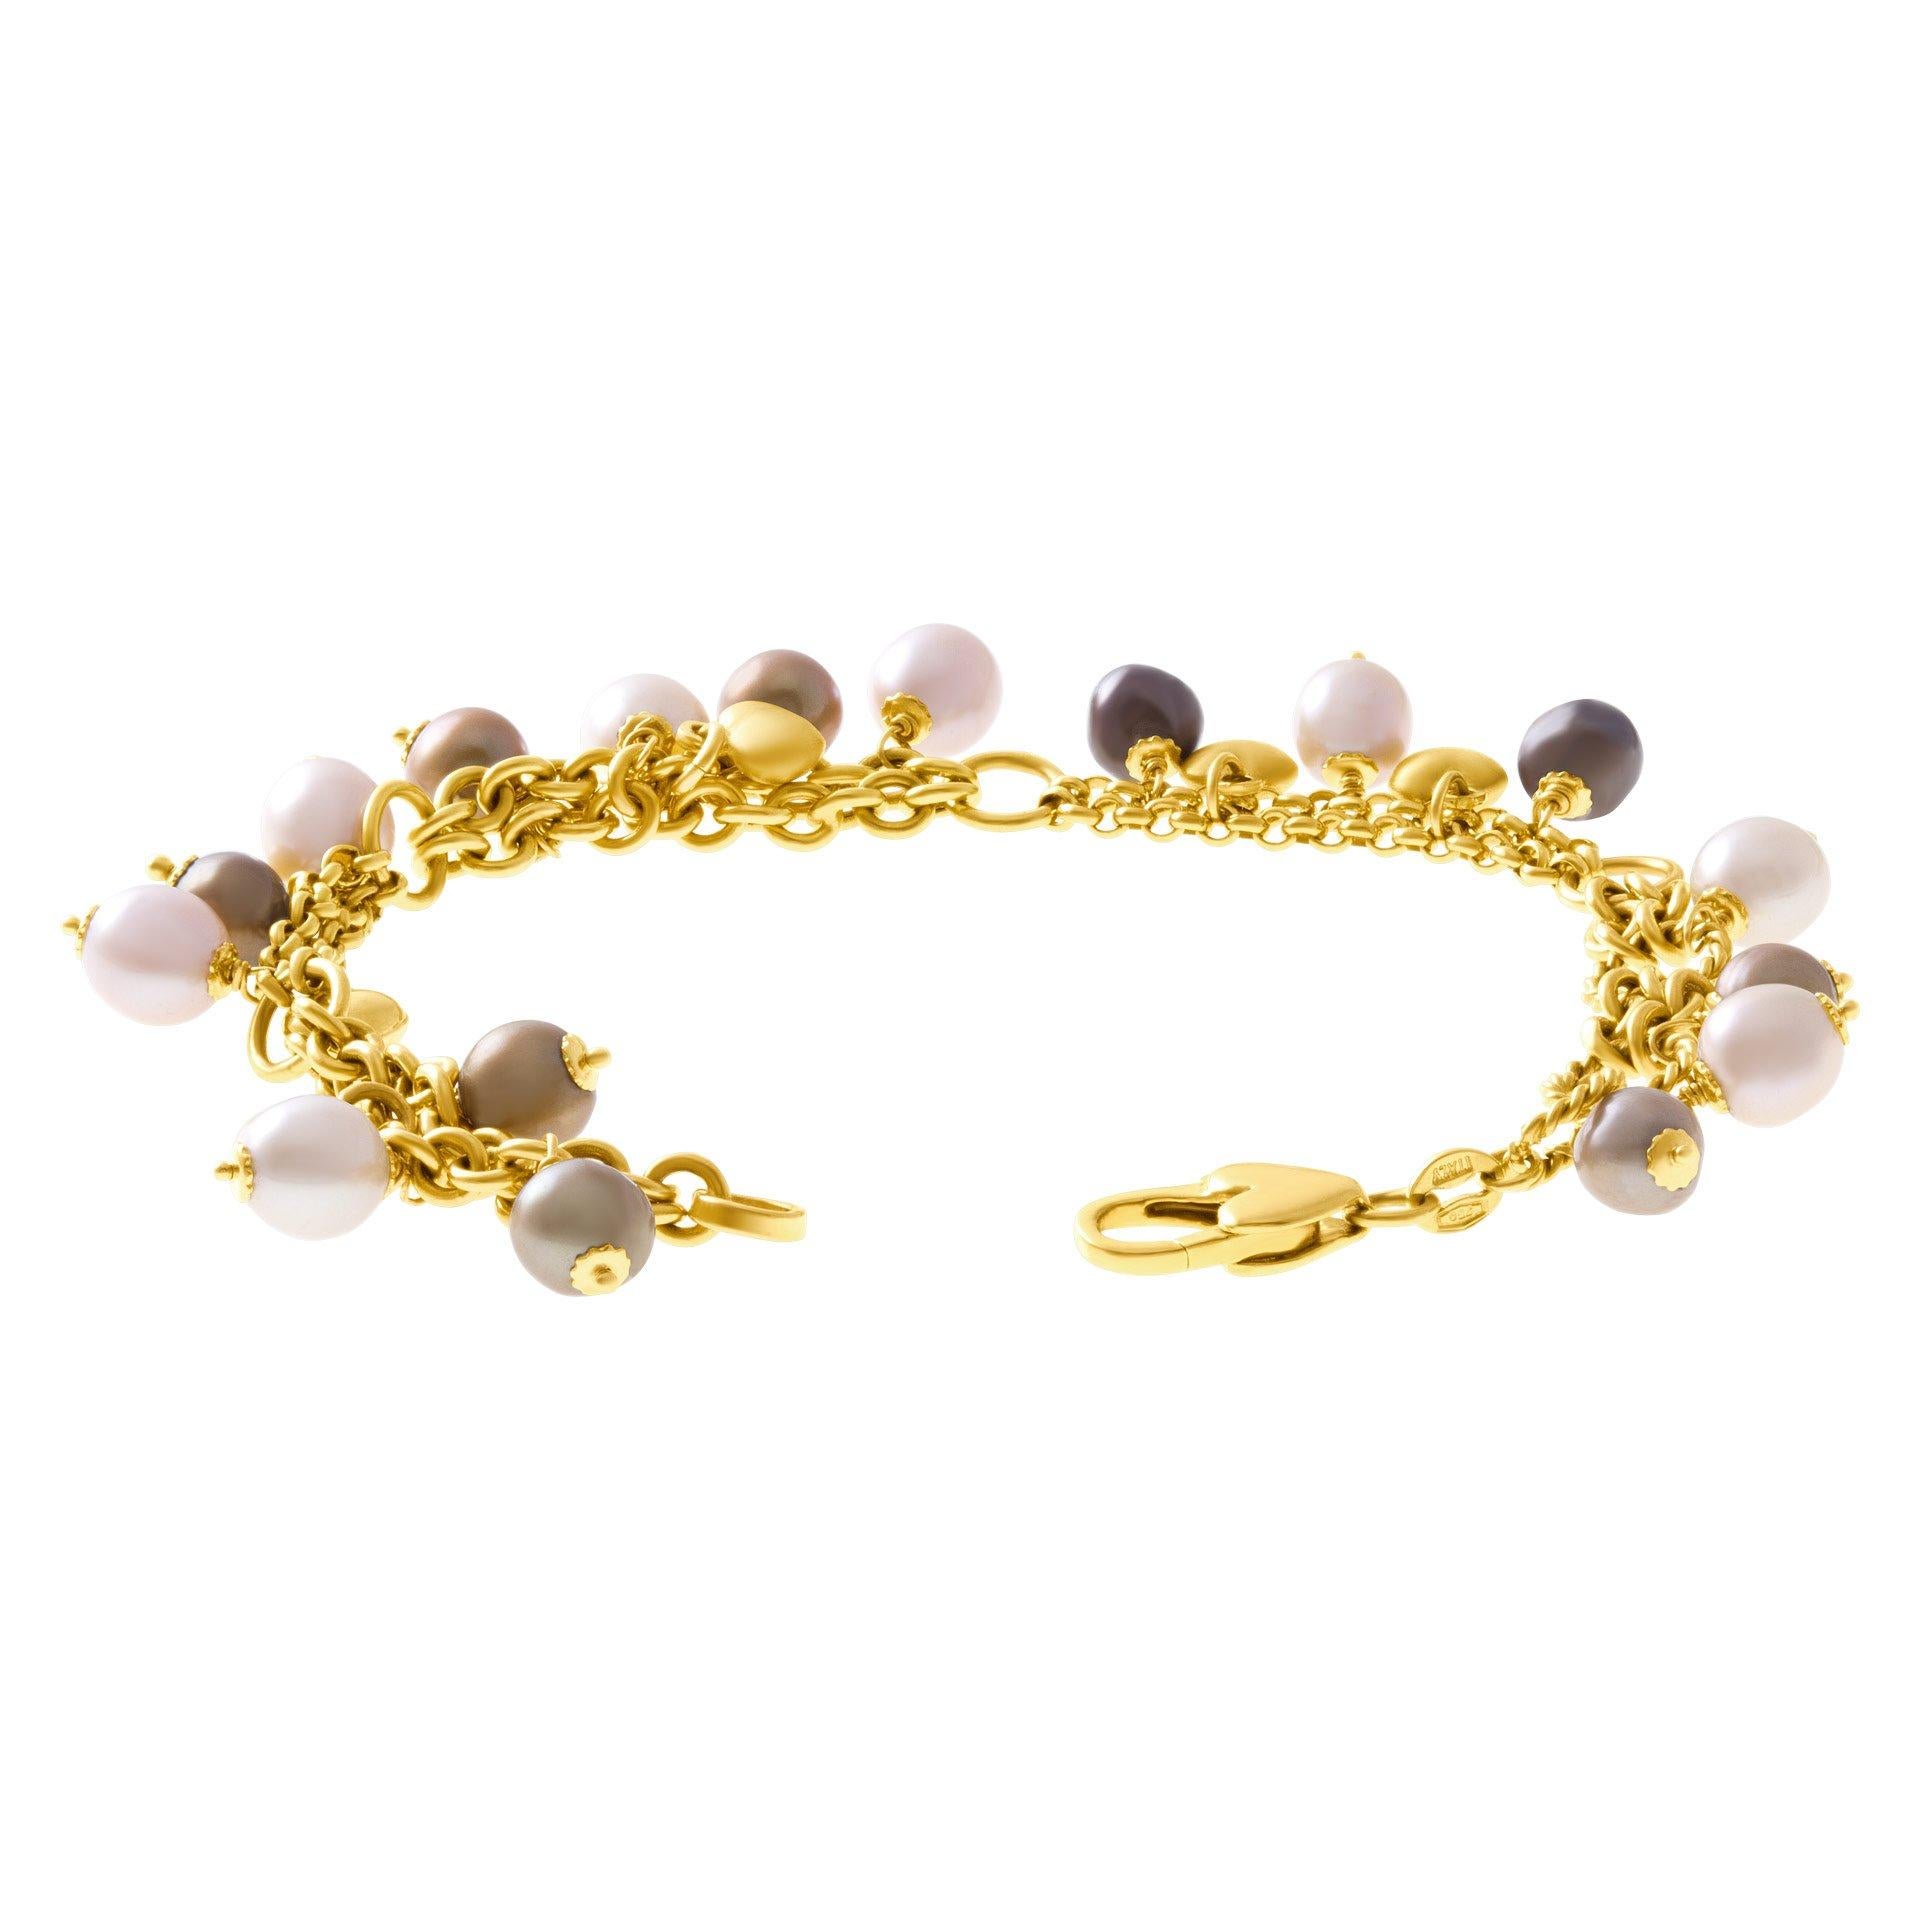 Beautiful pearl bracelet set in 18k yellow gold. Length: 7.75